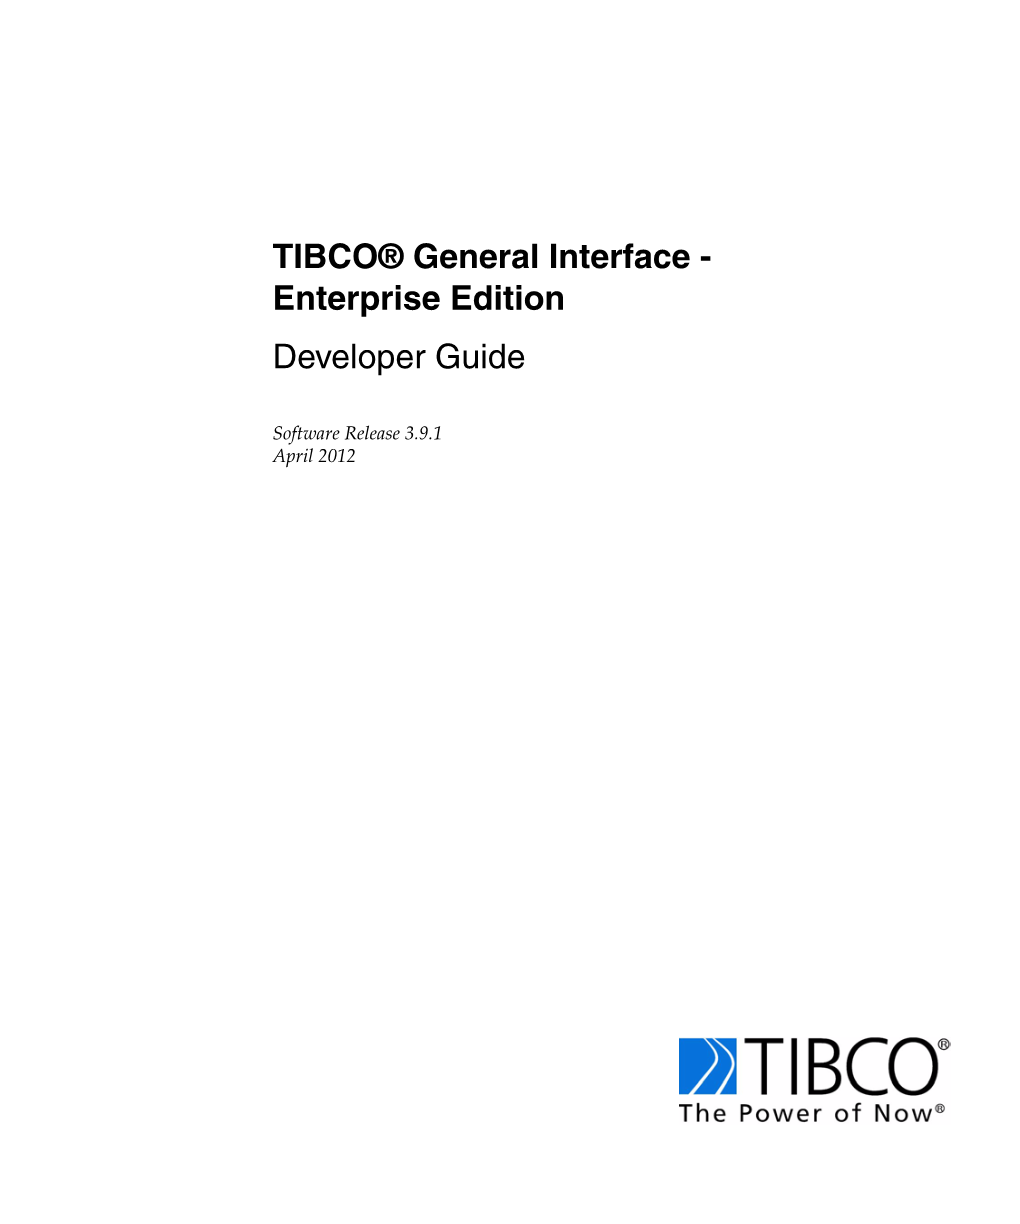 TIBCO® General Interface - Enterprise Edition Developer Guide